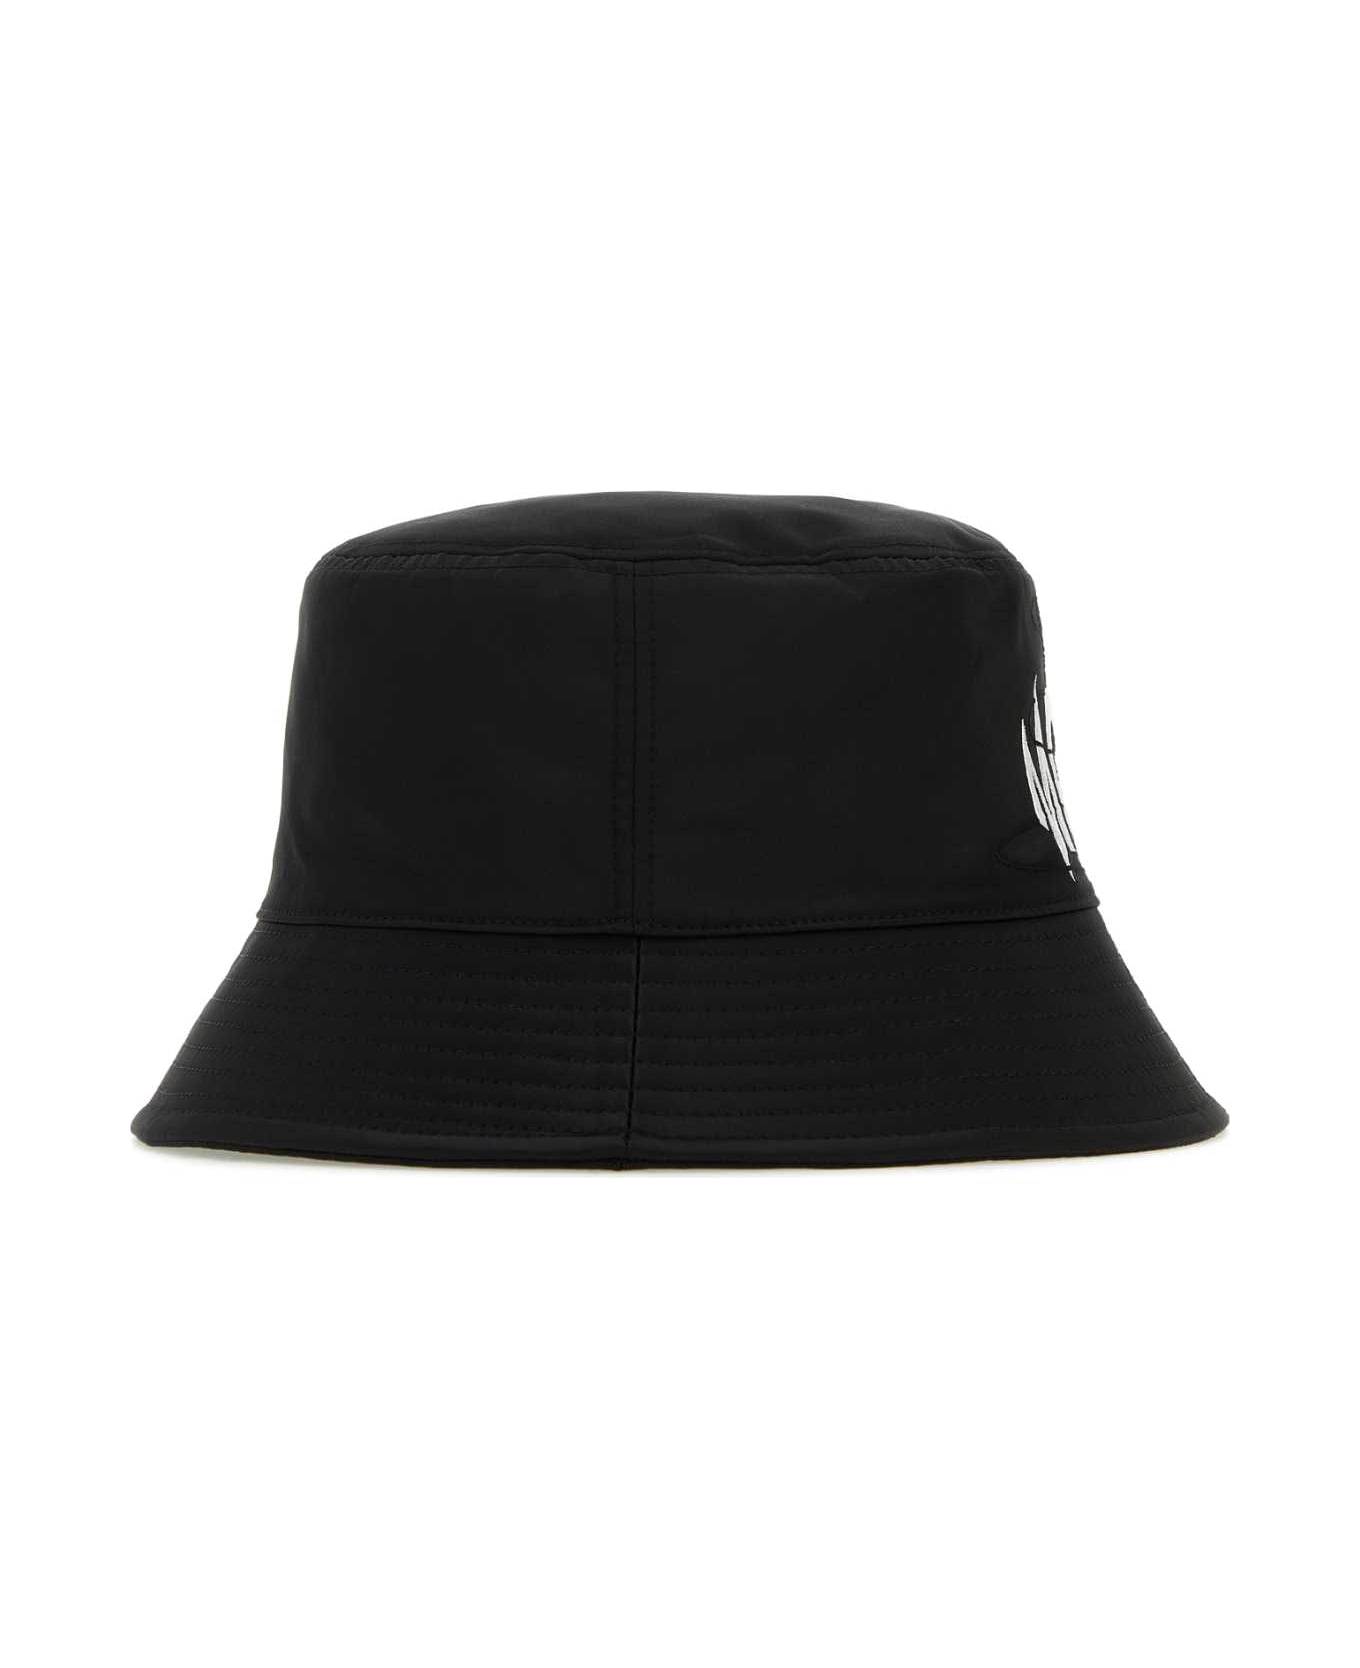 MCM Black Nylon Bucket Hat - BLACK 帽子